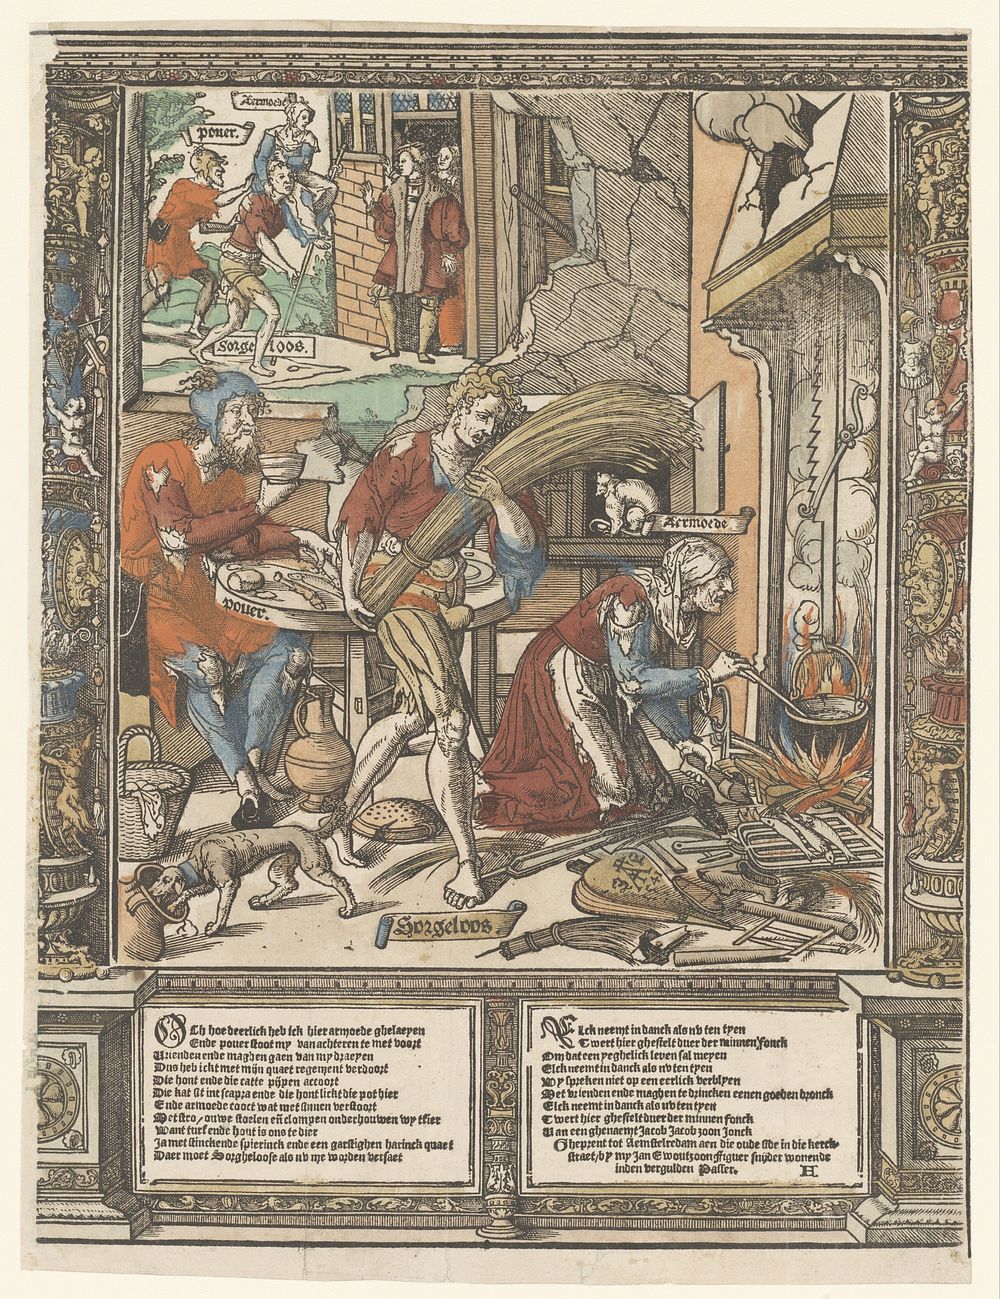 Sorgheloos leeft in armoede (1541) by Cornelis Anthonisz, Jan Ewoutsz, Jacob Jacobsz Jonck and Jan Ewoutsz